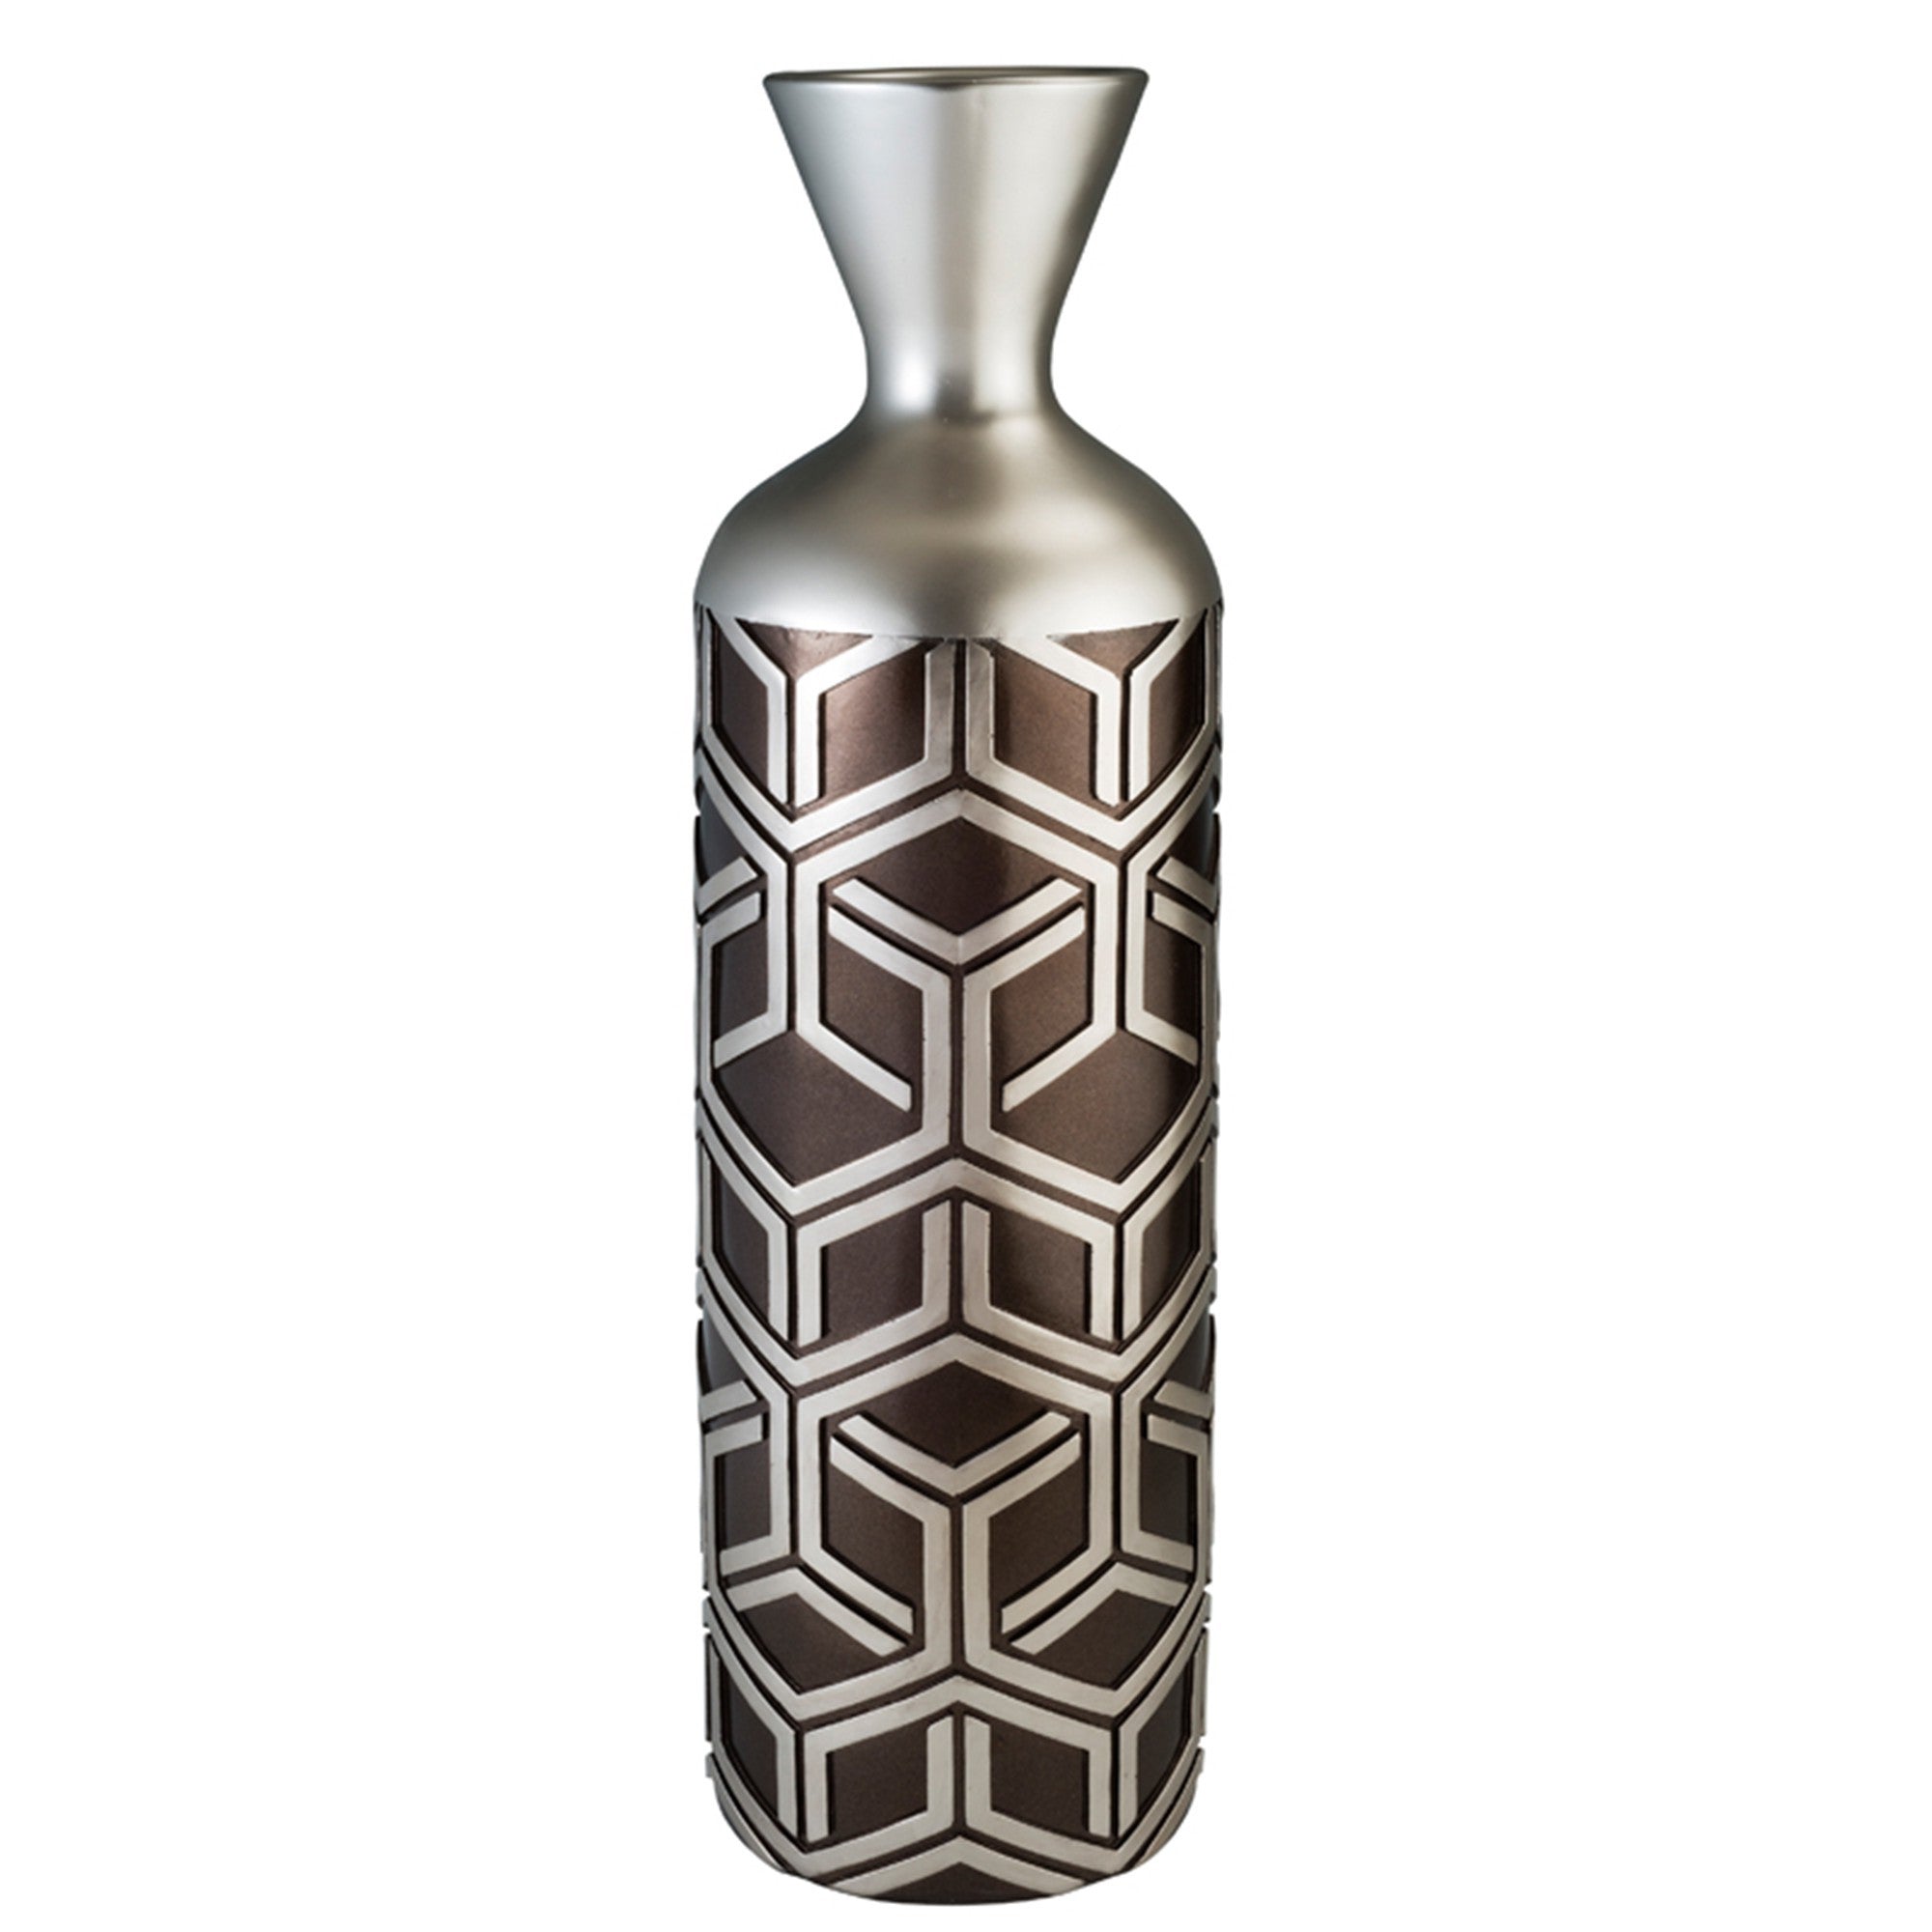 22" Brown and Silver Geometric Polyresin Floor Vase